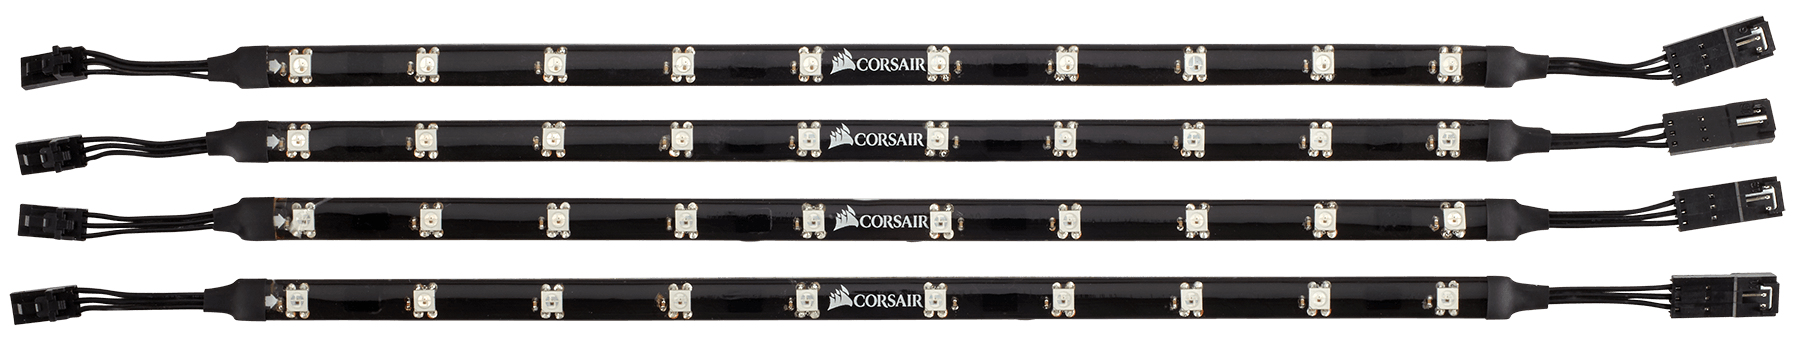 Corsair RGB LED Lighting PRO Expansion Kit - Systemgehäusebeleuchtung (LED)